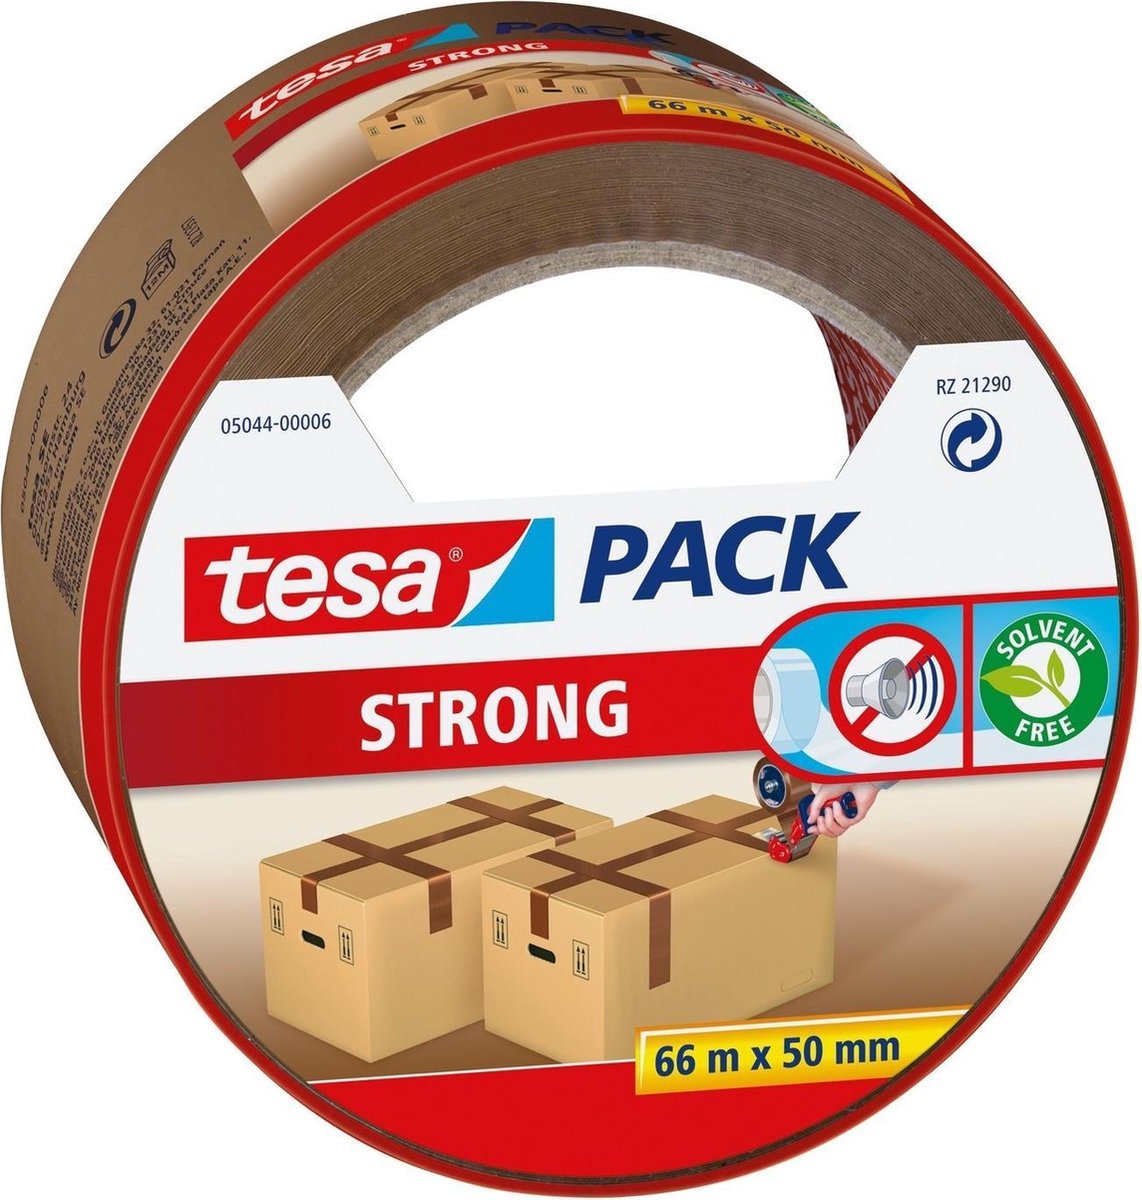 4x Tesa verpakkingstape bruin 66 mtr x 50 mm - Klusmateriaal - Verpakkingsmateriaal - Inpakmateriaal - Verpakkingsbenodigdheden - Verpakkingstape/inpaktape - Dozen afsluittape - Tesa